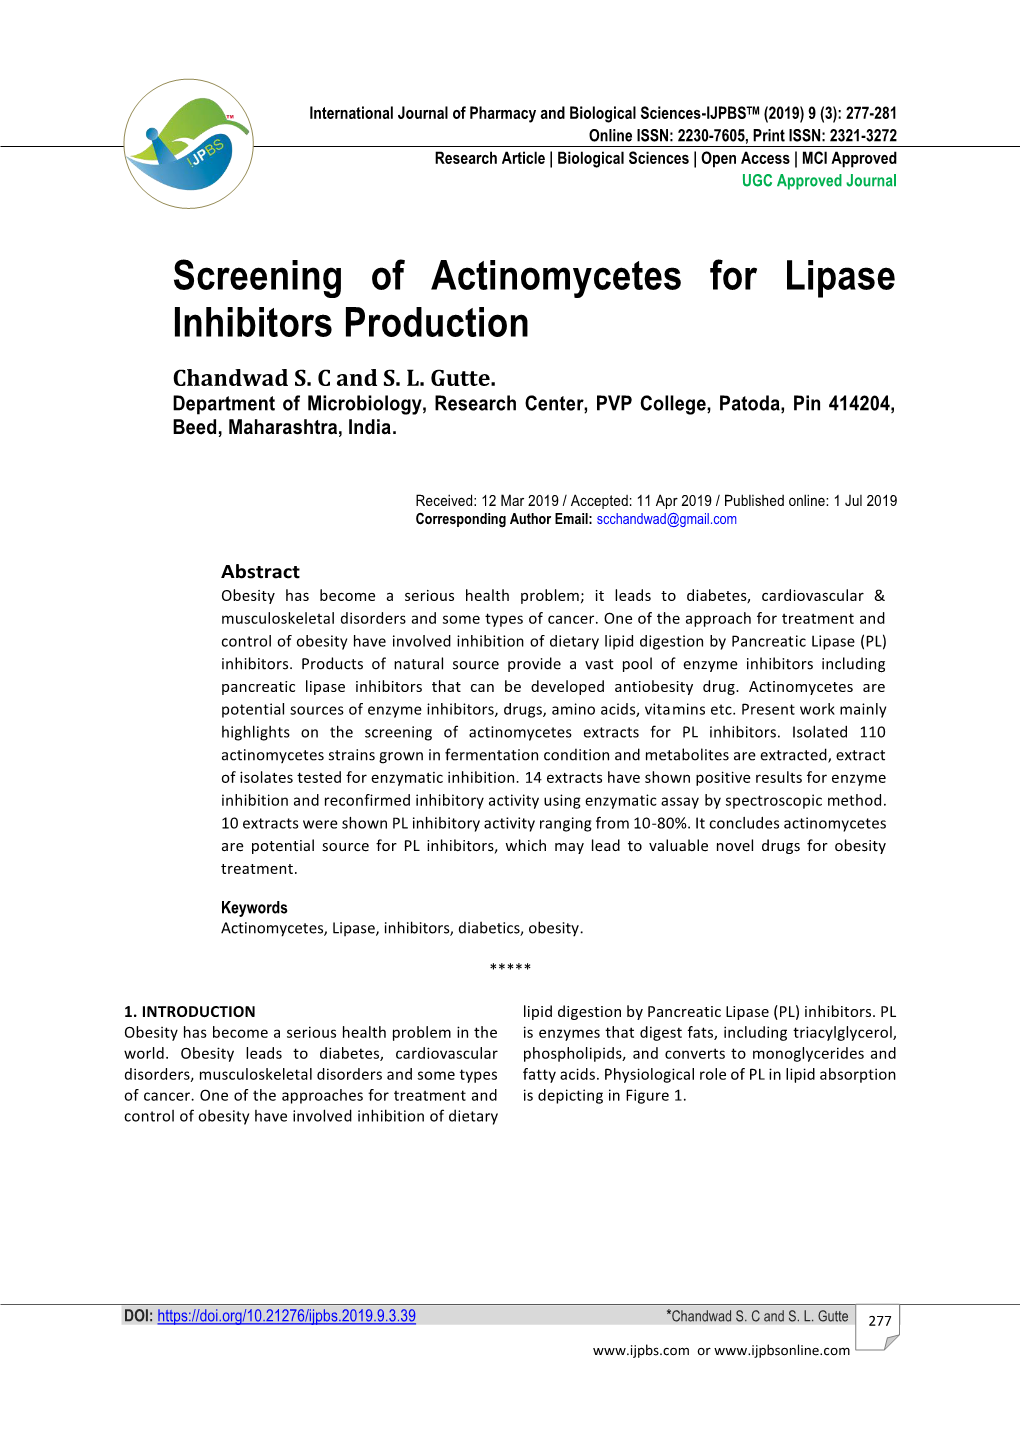 Screening of Actinomycetes for Lipase Inhibitors Production